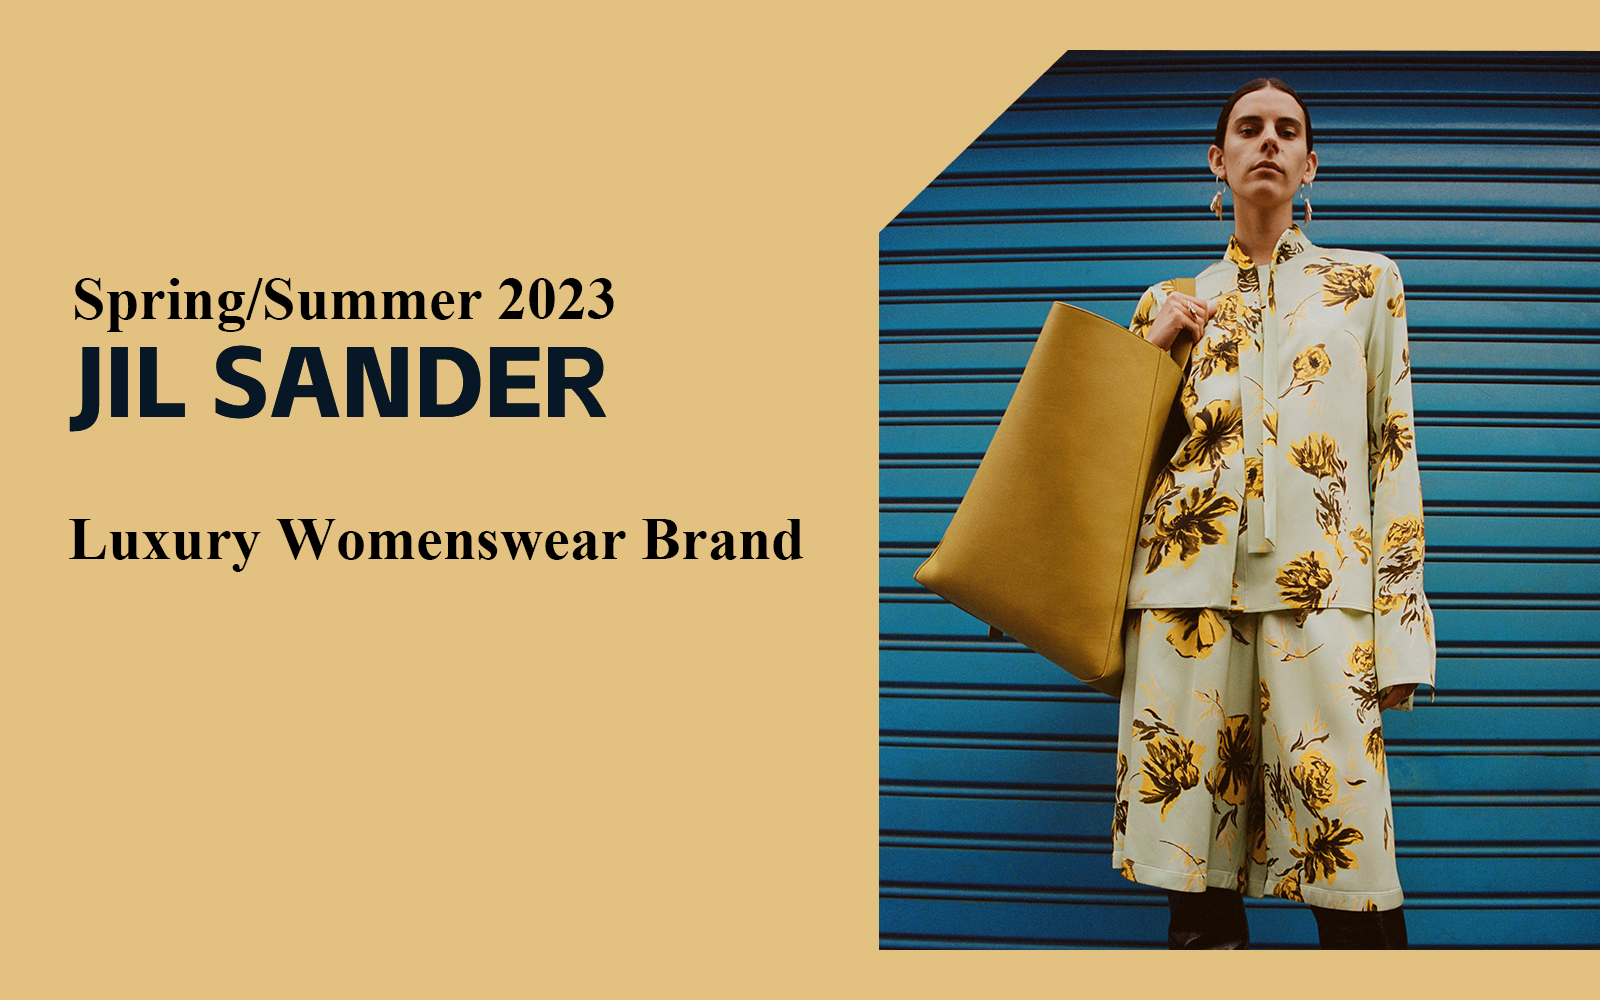 The Analysis of Jil Sander The Luxury Womenswear Brand